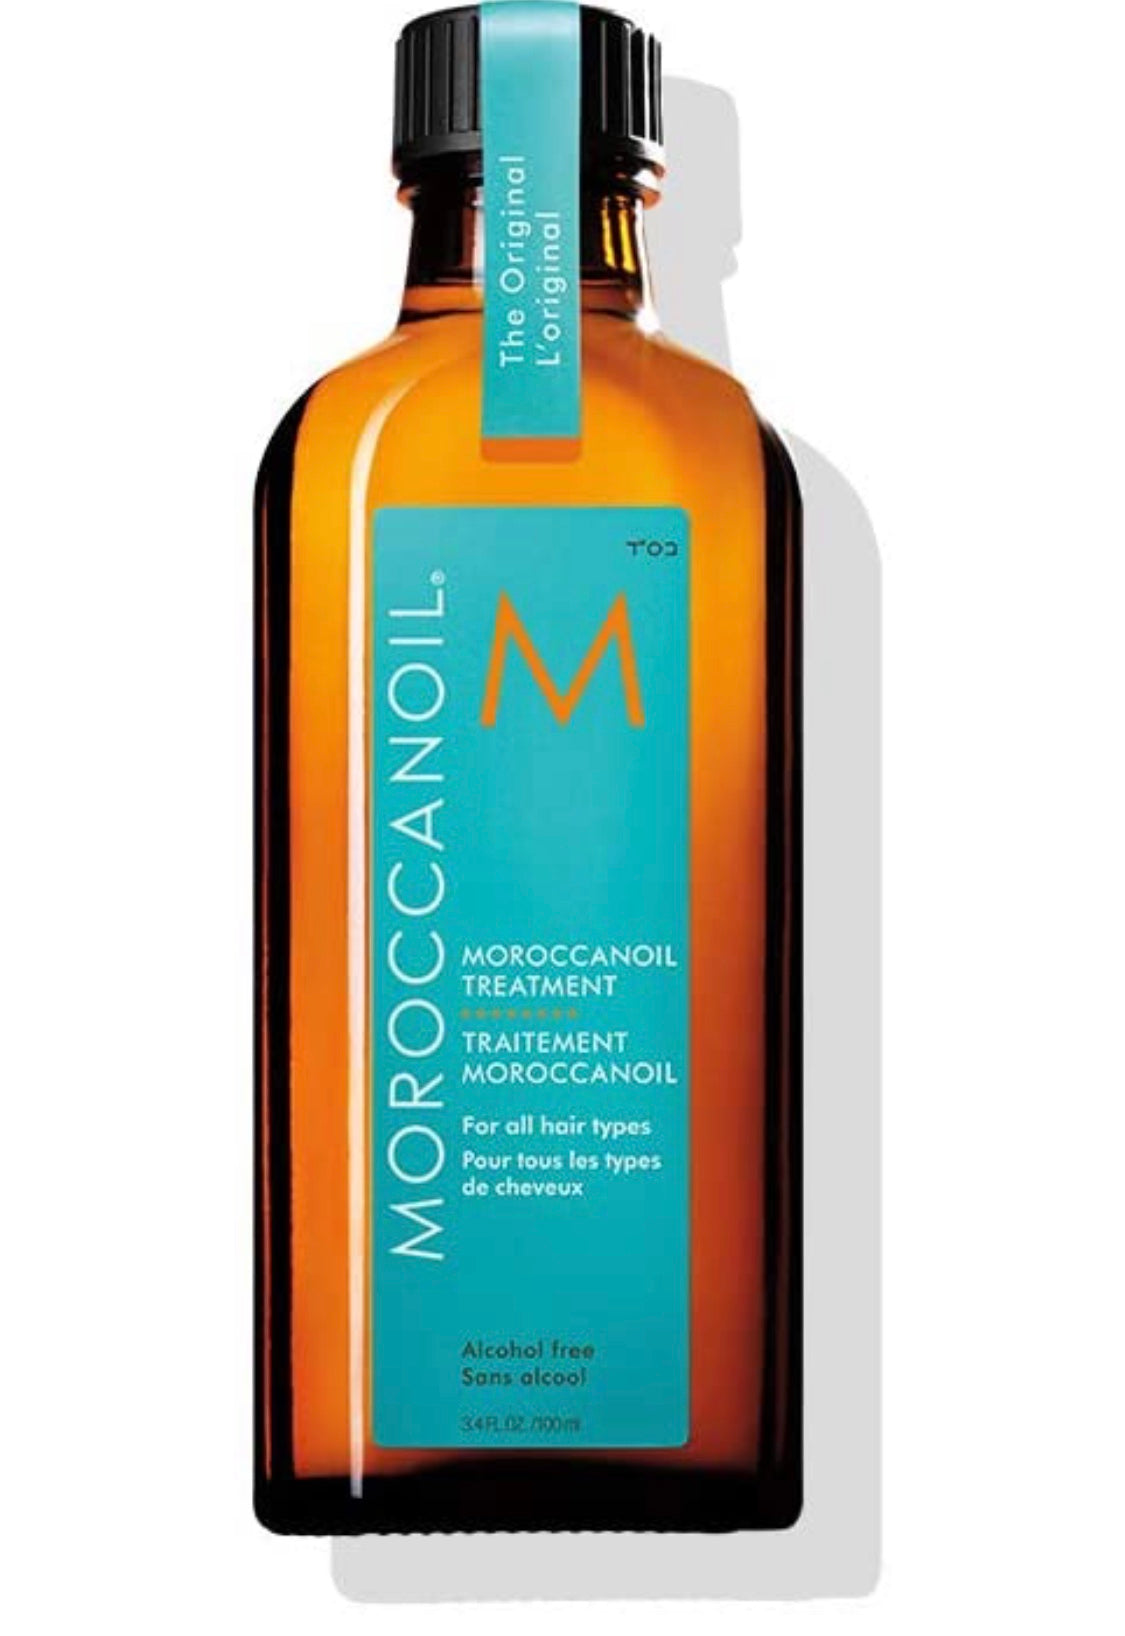 Moroccanoil - Treatment   3.4 fl. oz./ 100 ml